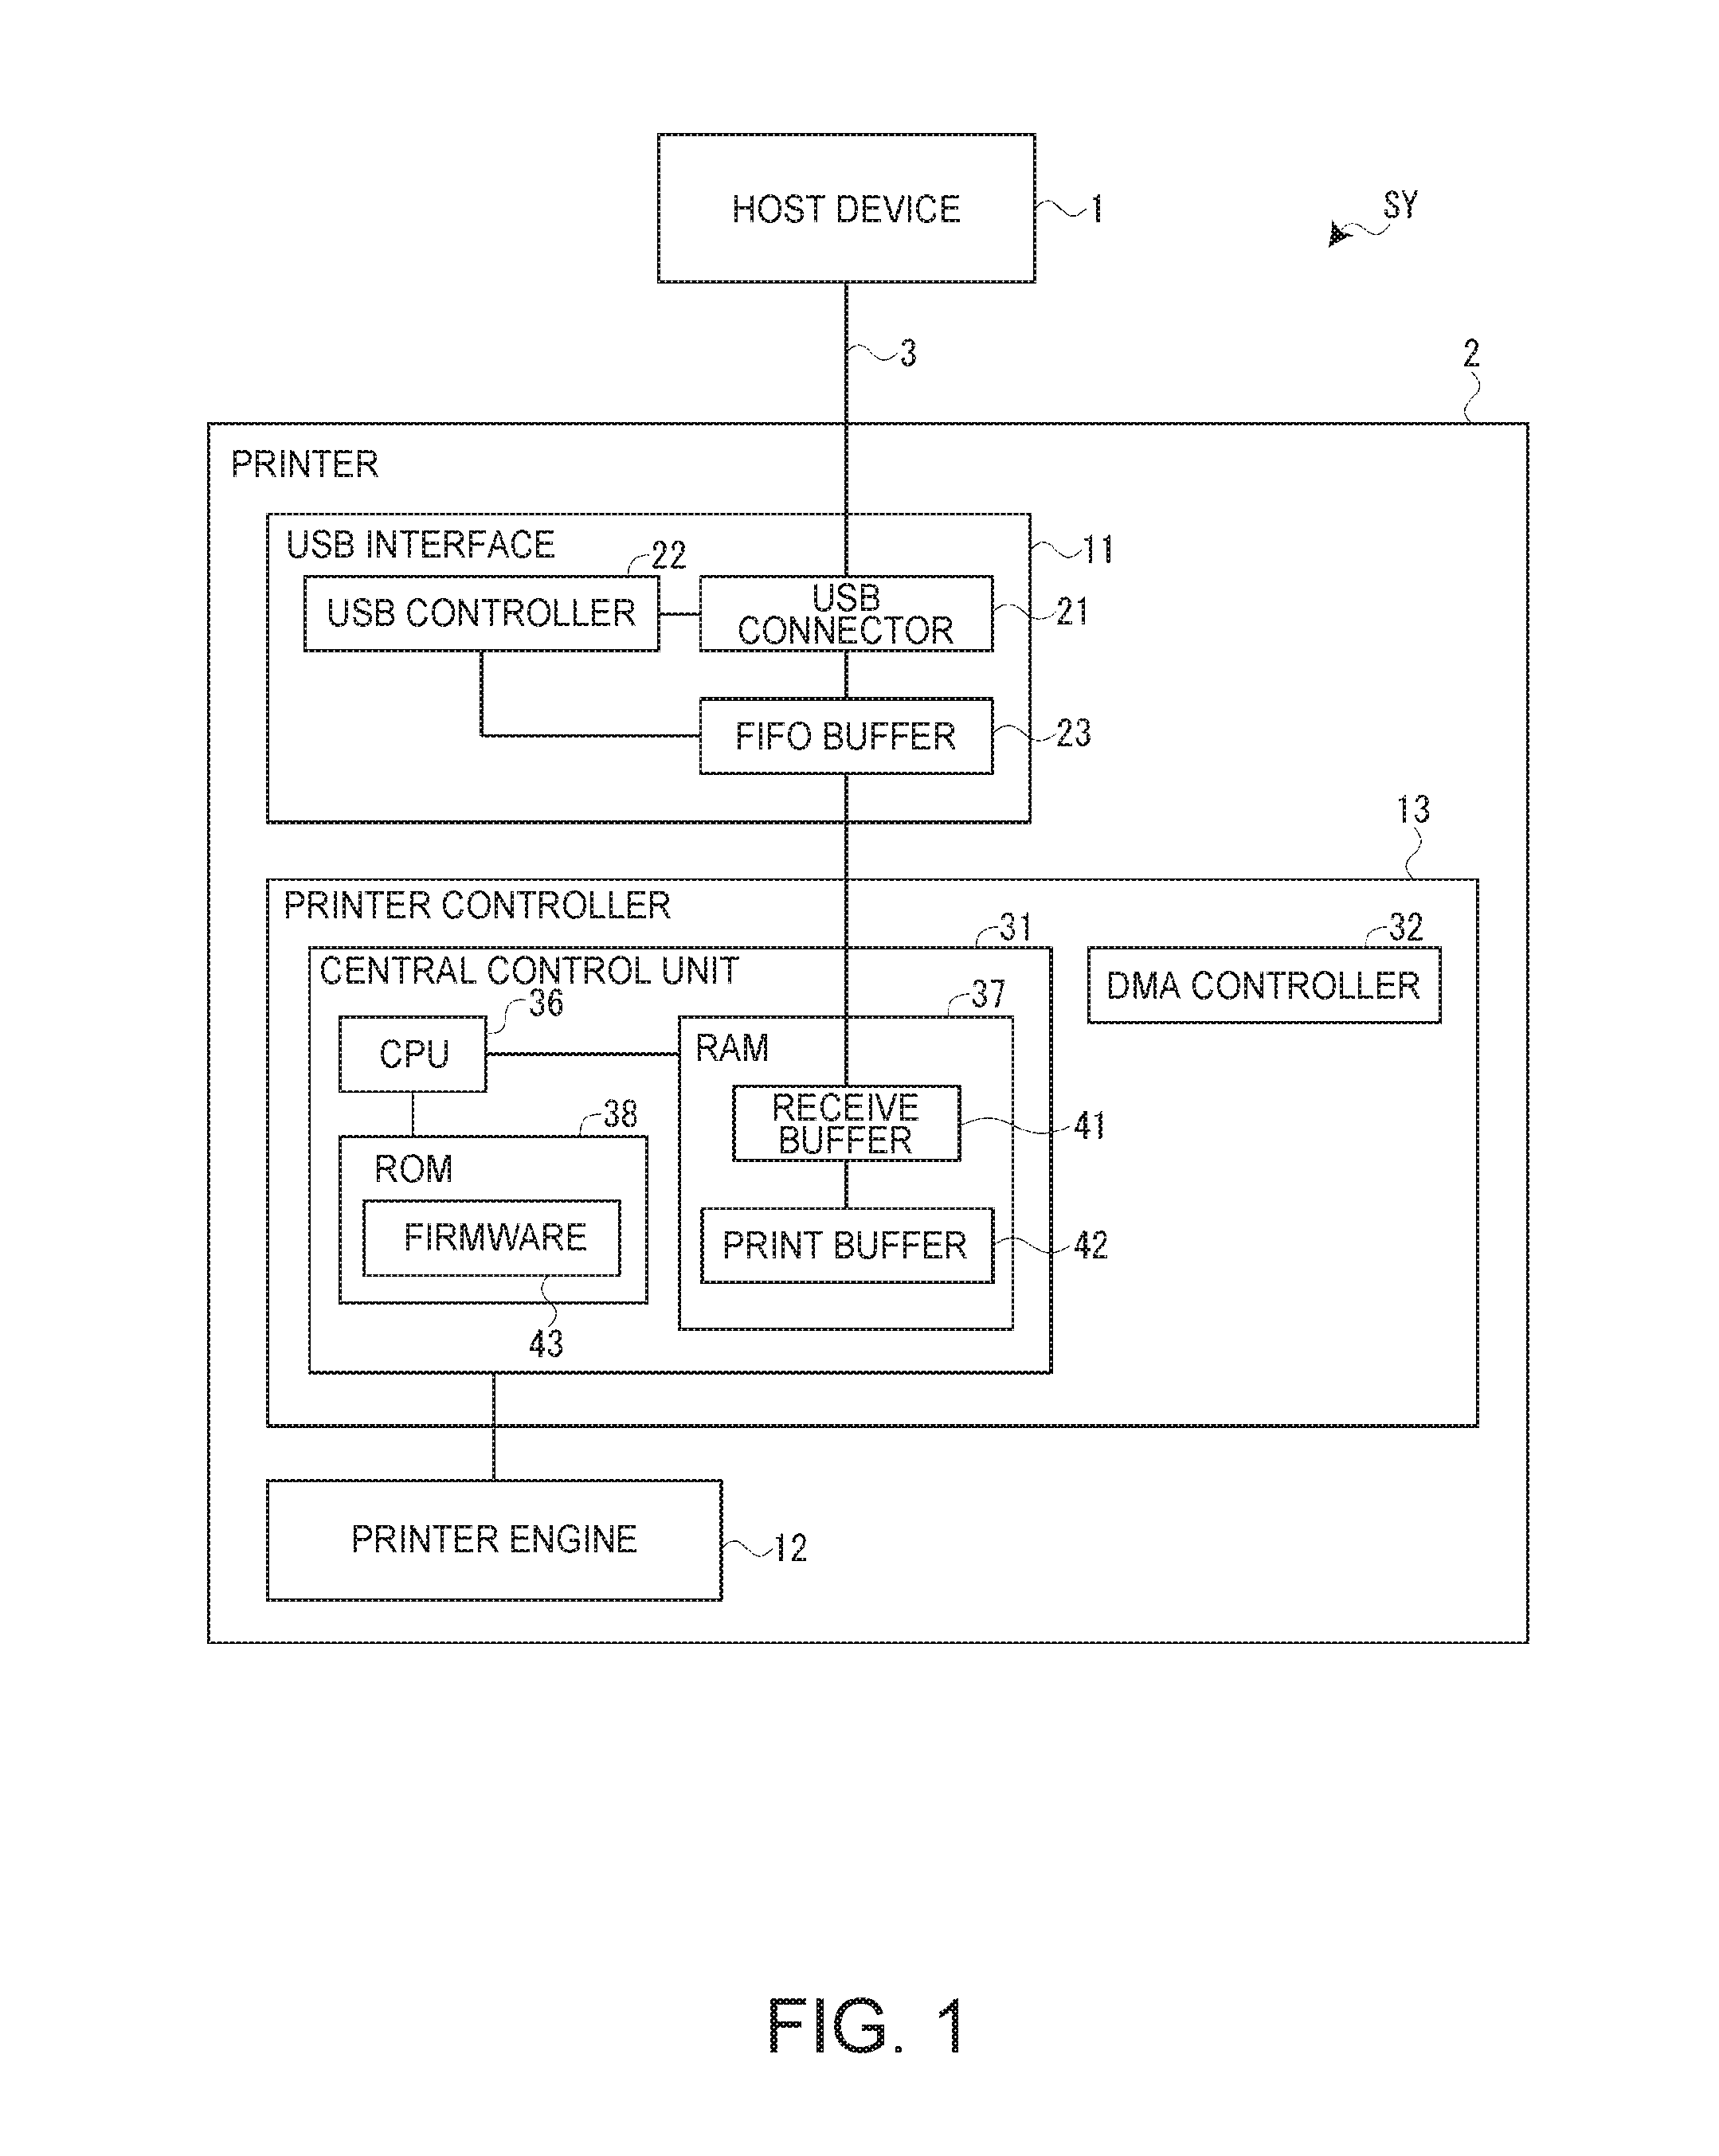 Printer and control method of a printer